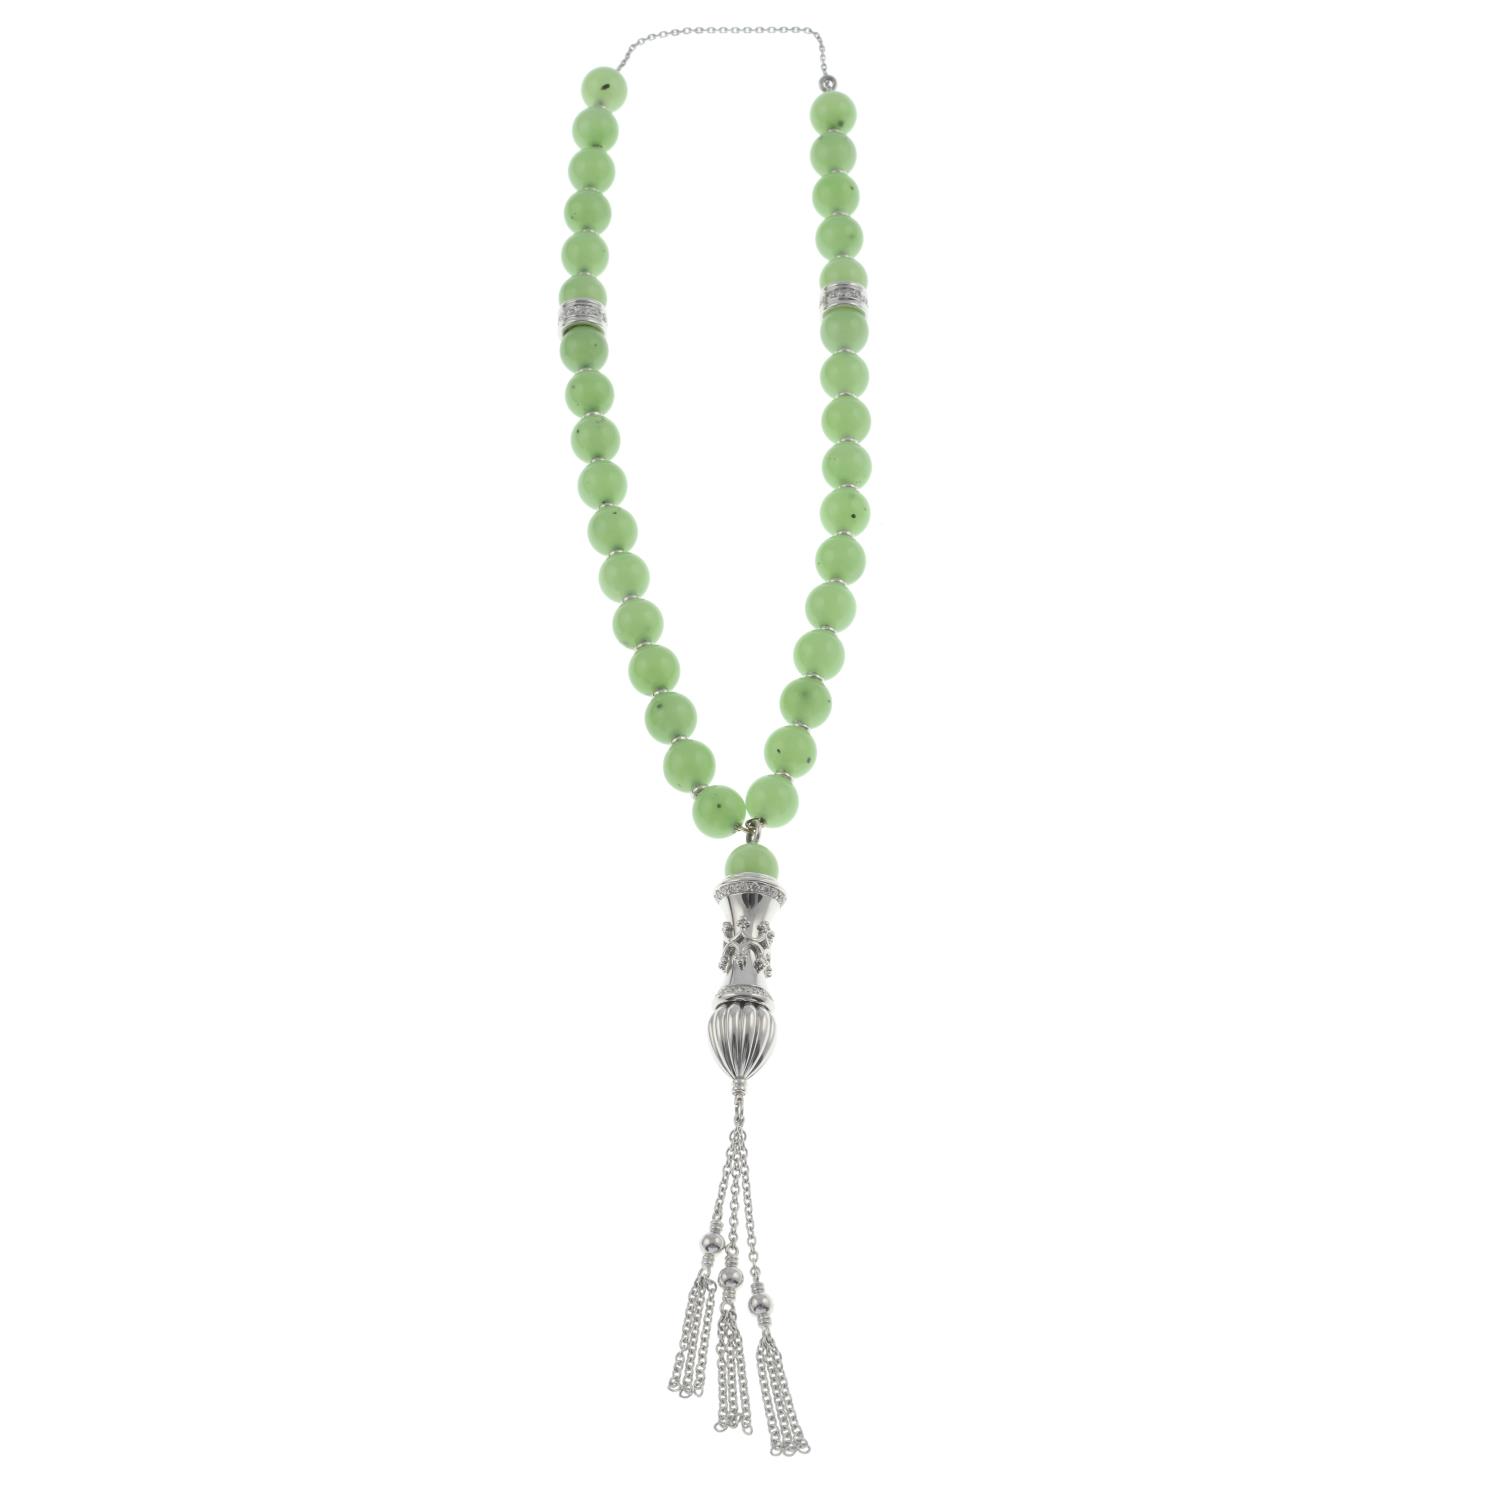 A set of nephrite jade and diamond Misbaha or prayer beads. - Image 3 of 3